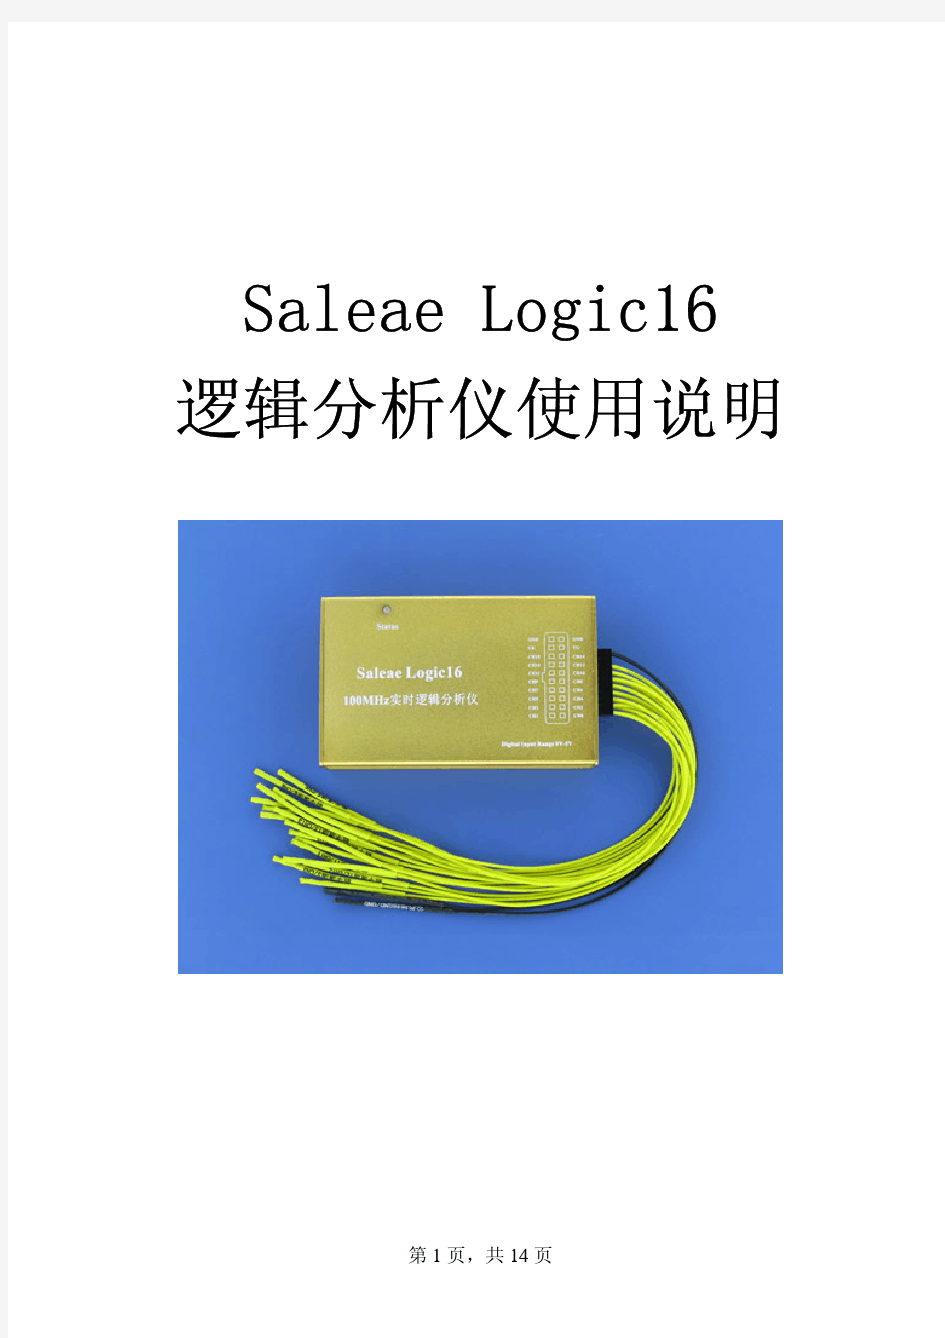 SaleaeLogic16逻辑分析使用说明